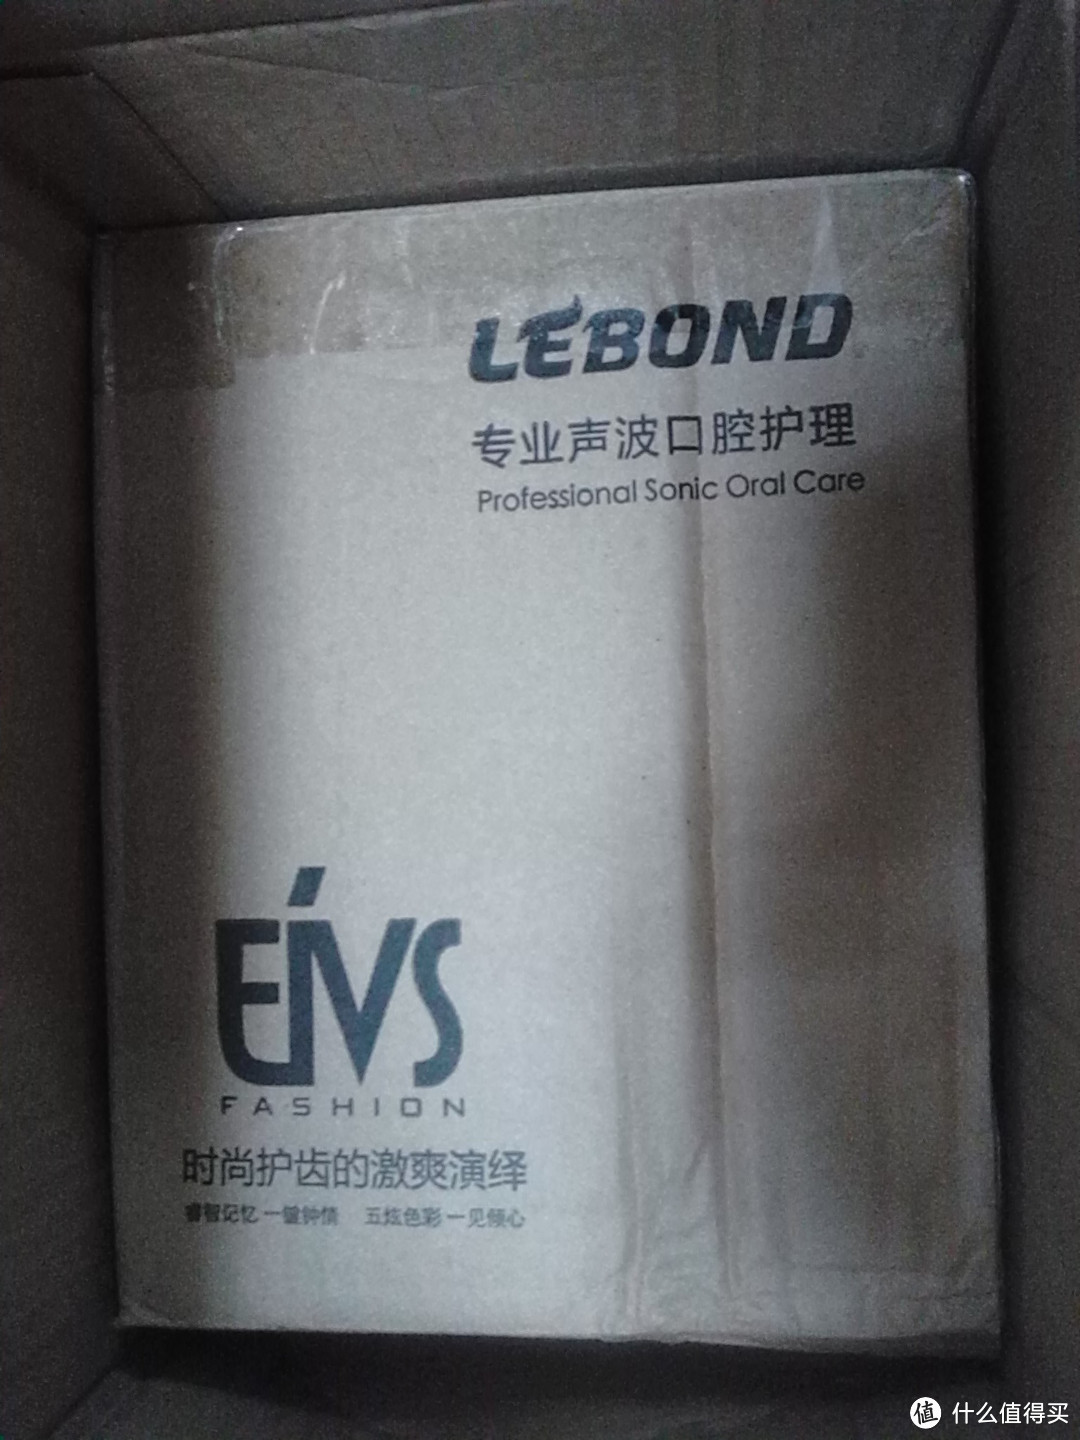 Lebond 力博得 EIVS系列 声波电动牙刷 199元中亚Z秒入手